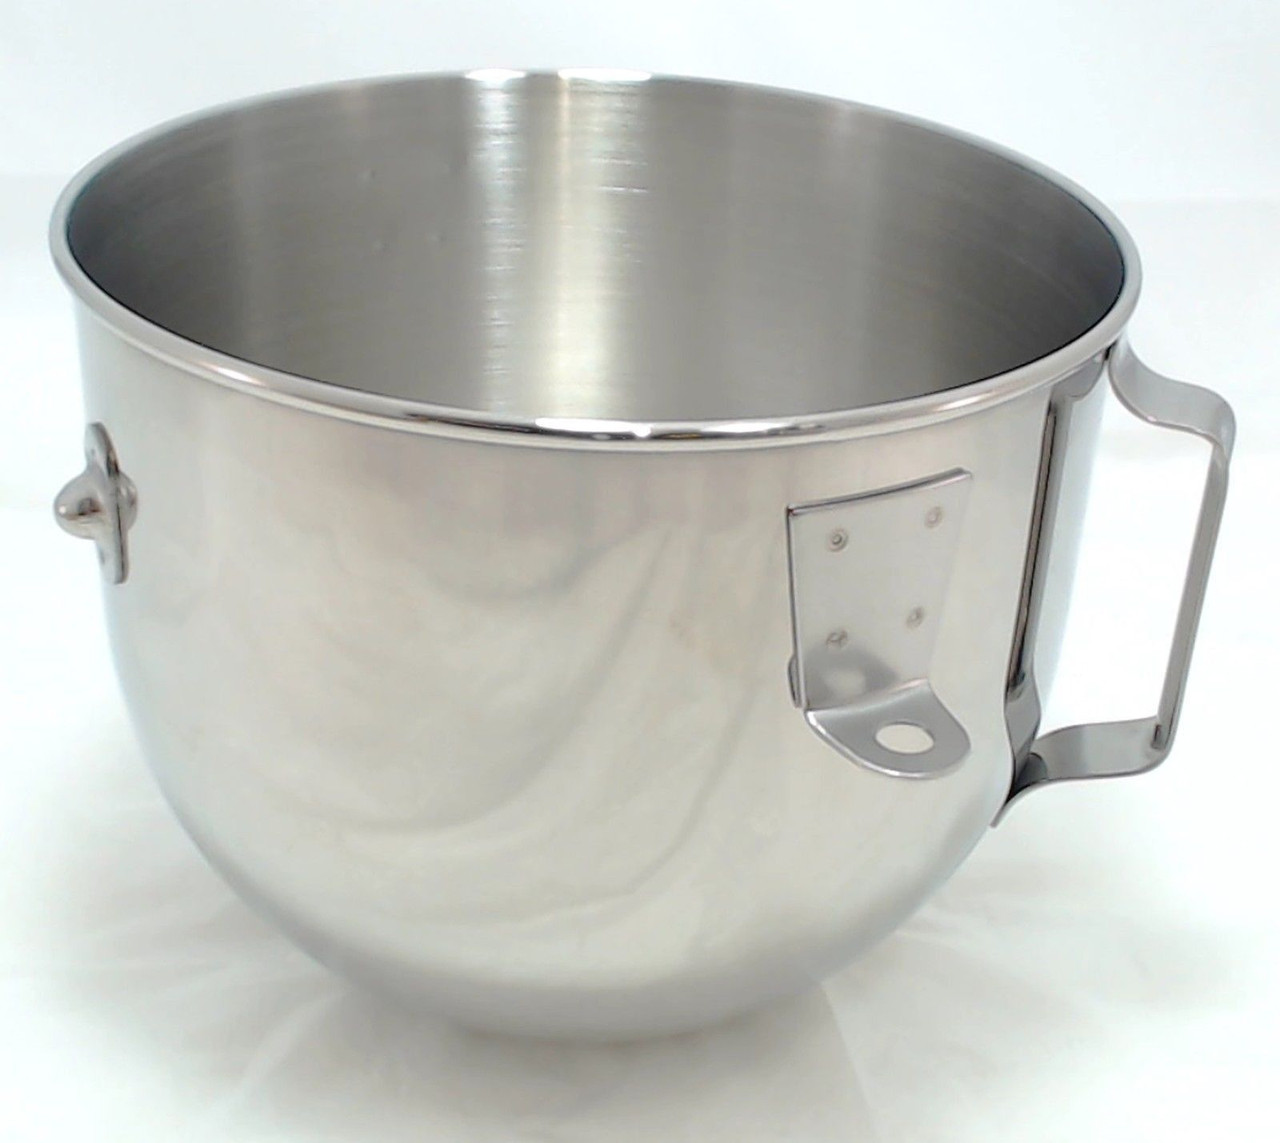 KitchenAid - KN2B6PEH 6-Quart Bowl - Stainless-Steel